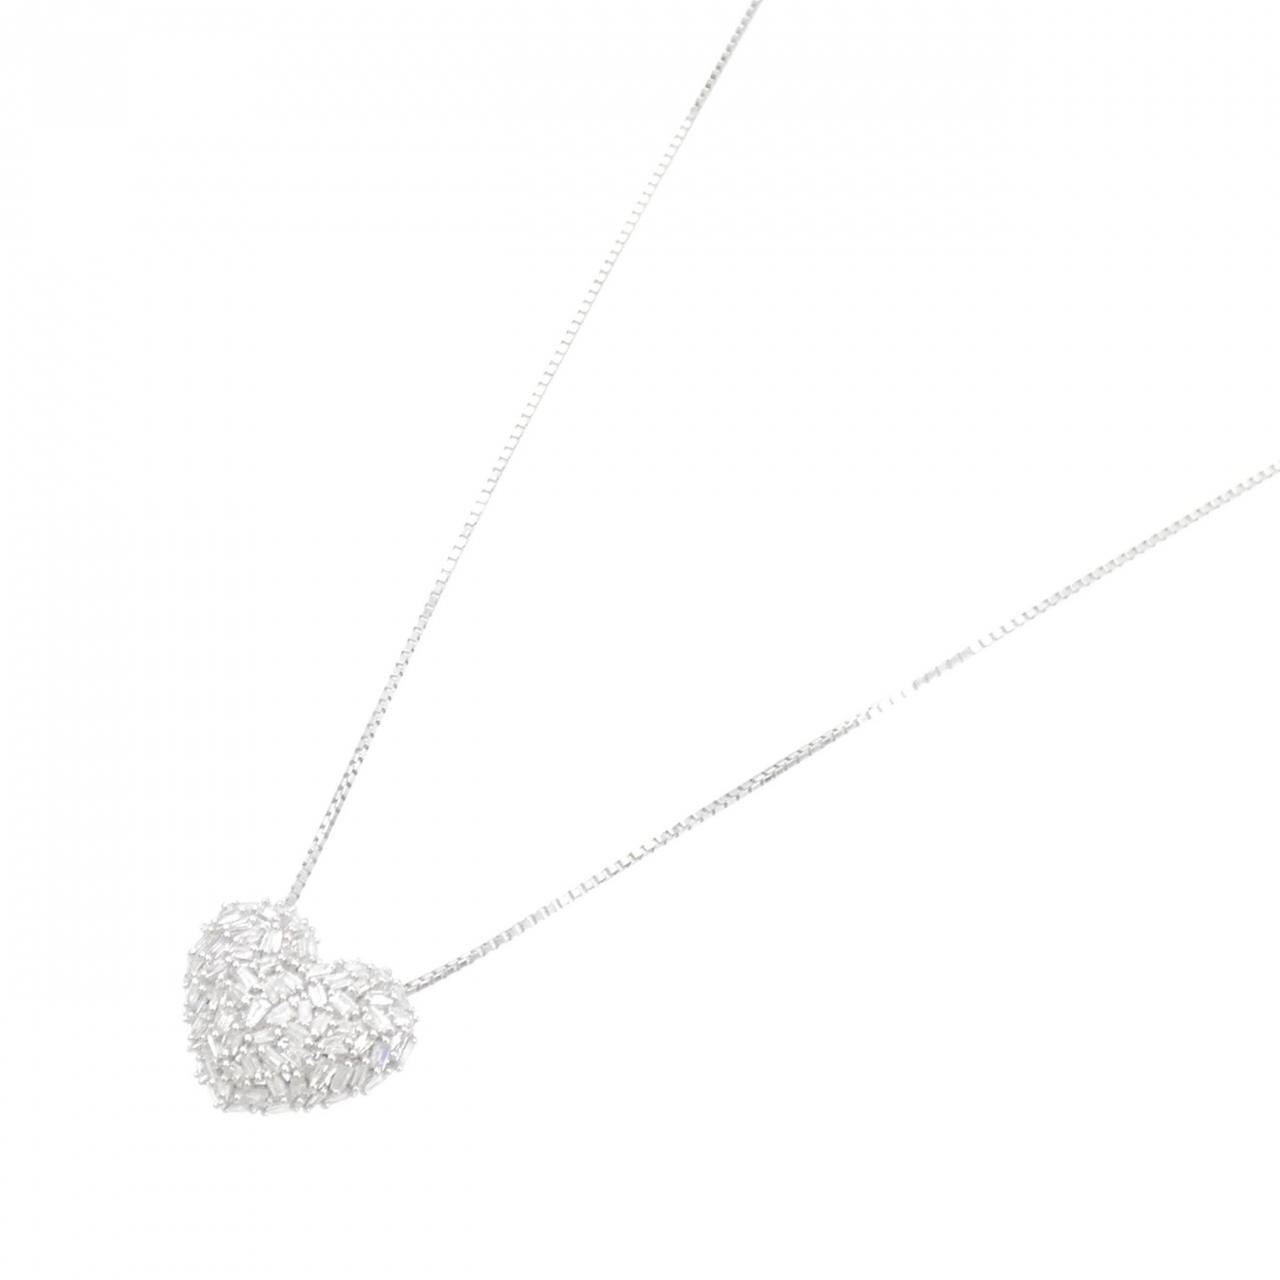 K18WG heart Diamond necklace 0.40CT